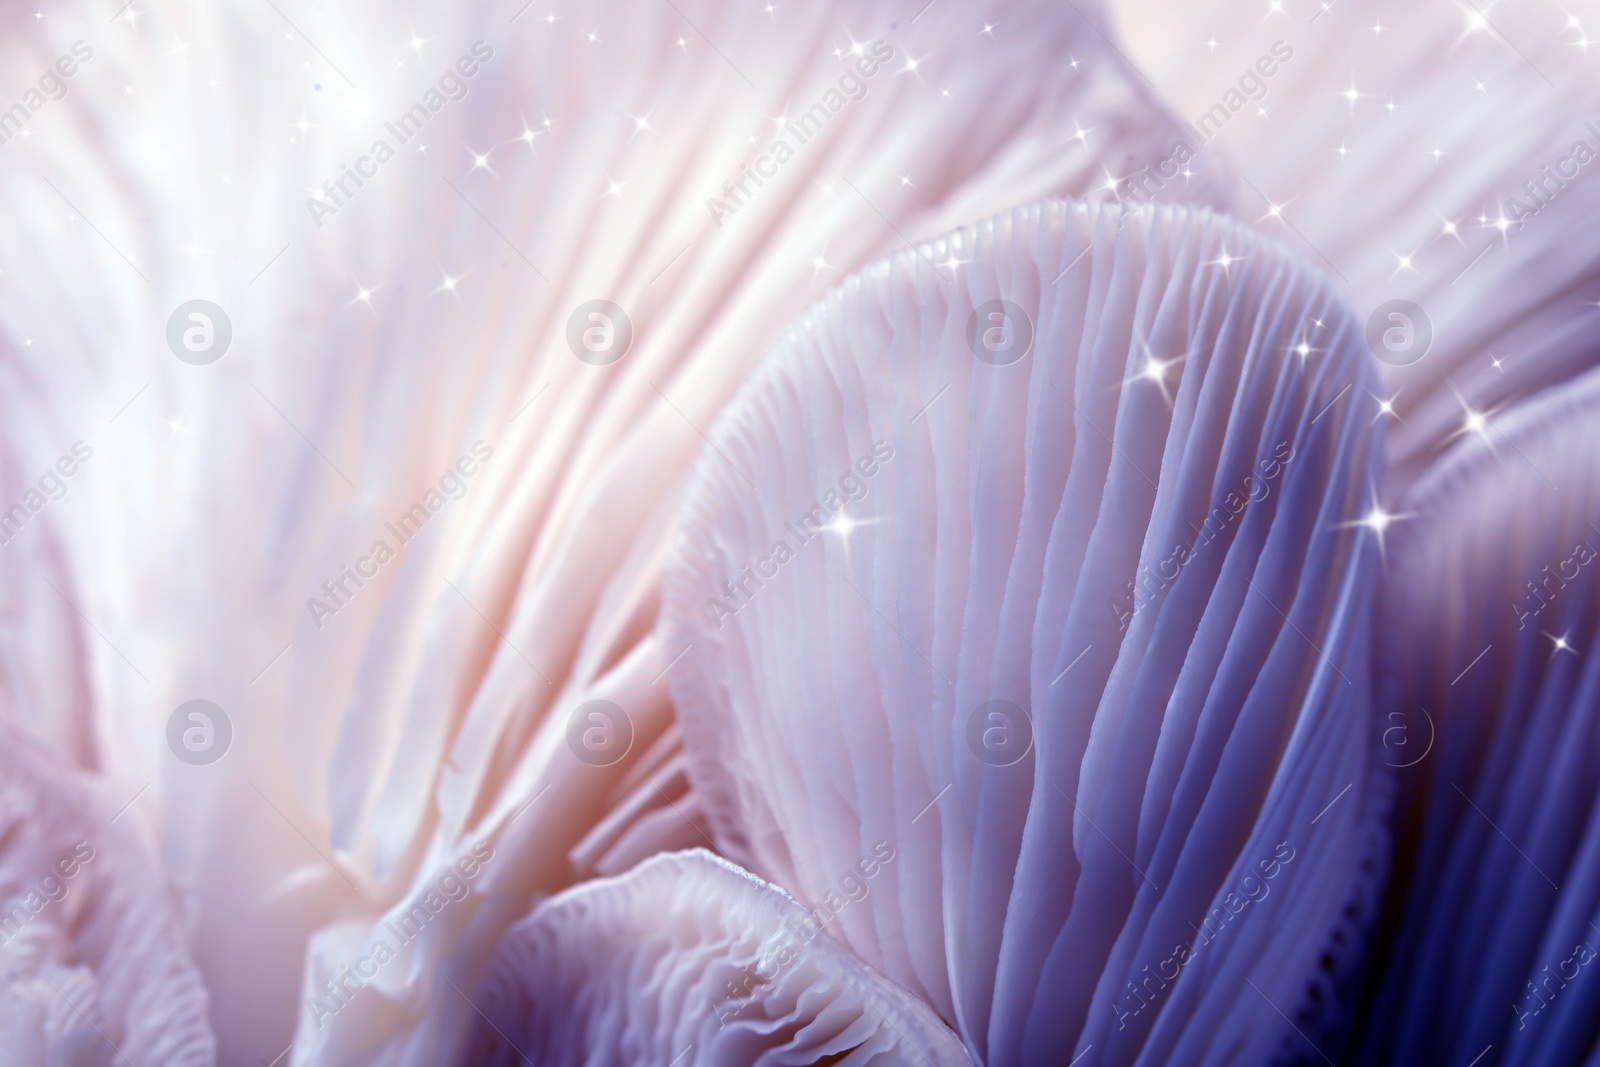 Image of Fresh psilocybin (magic) mushrooms with stars, closeup view. Color toned